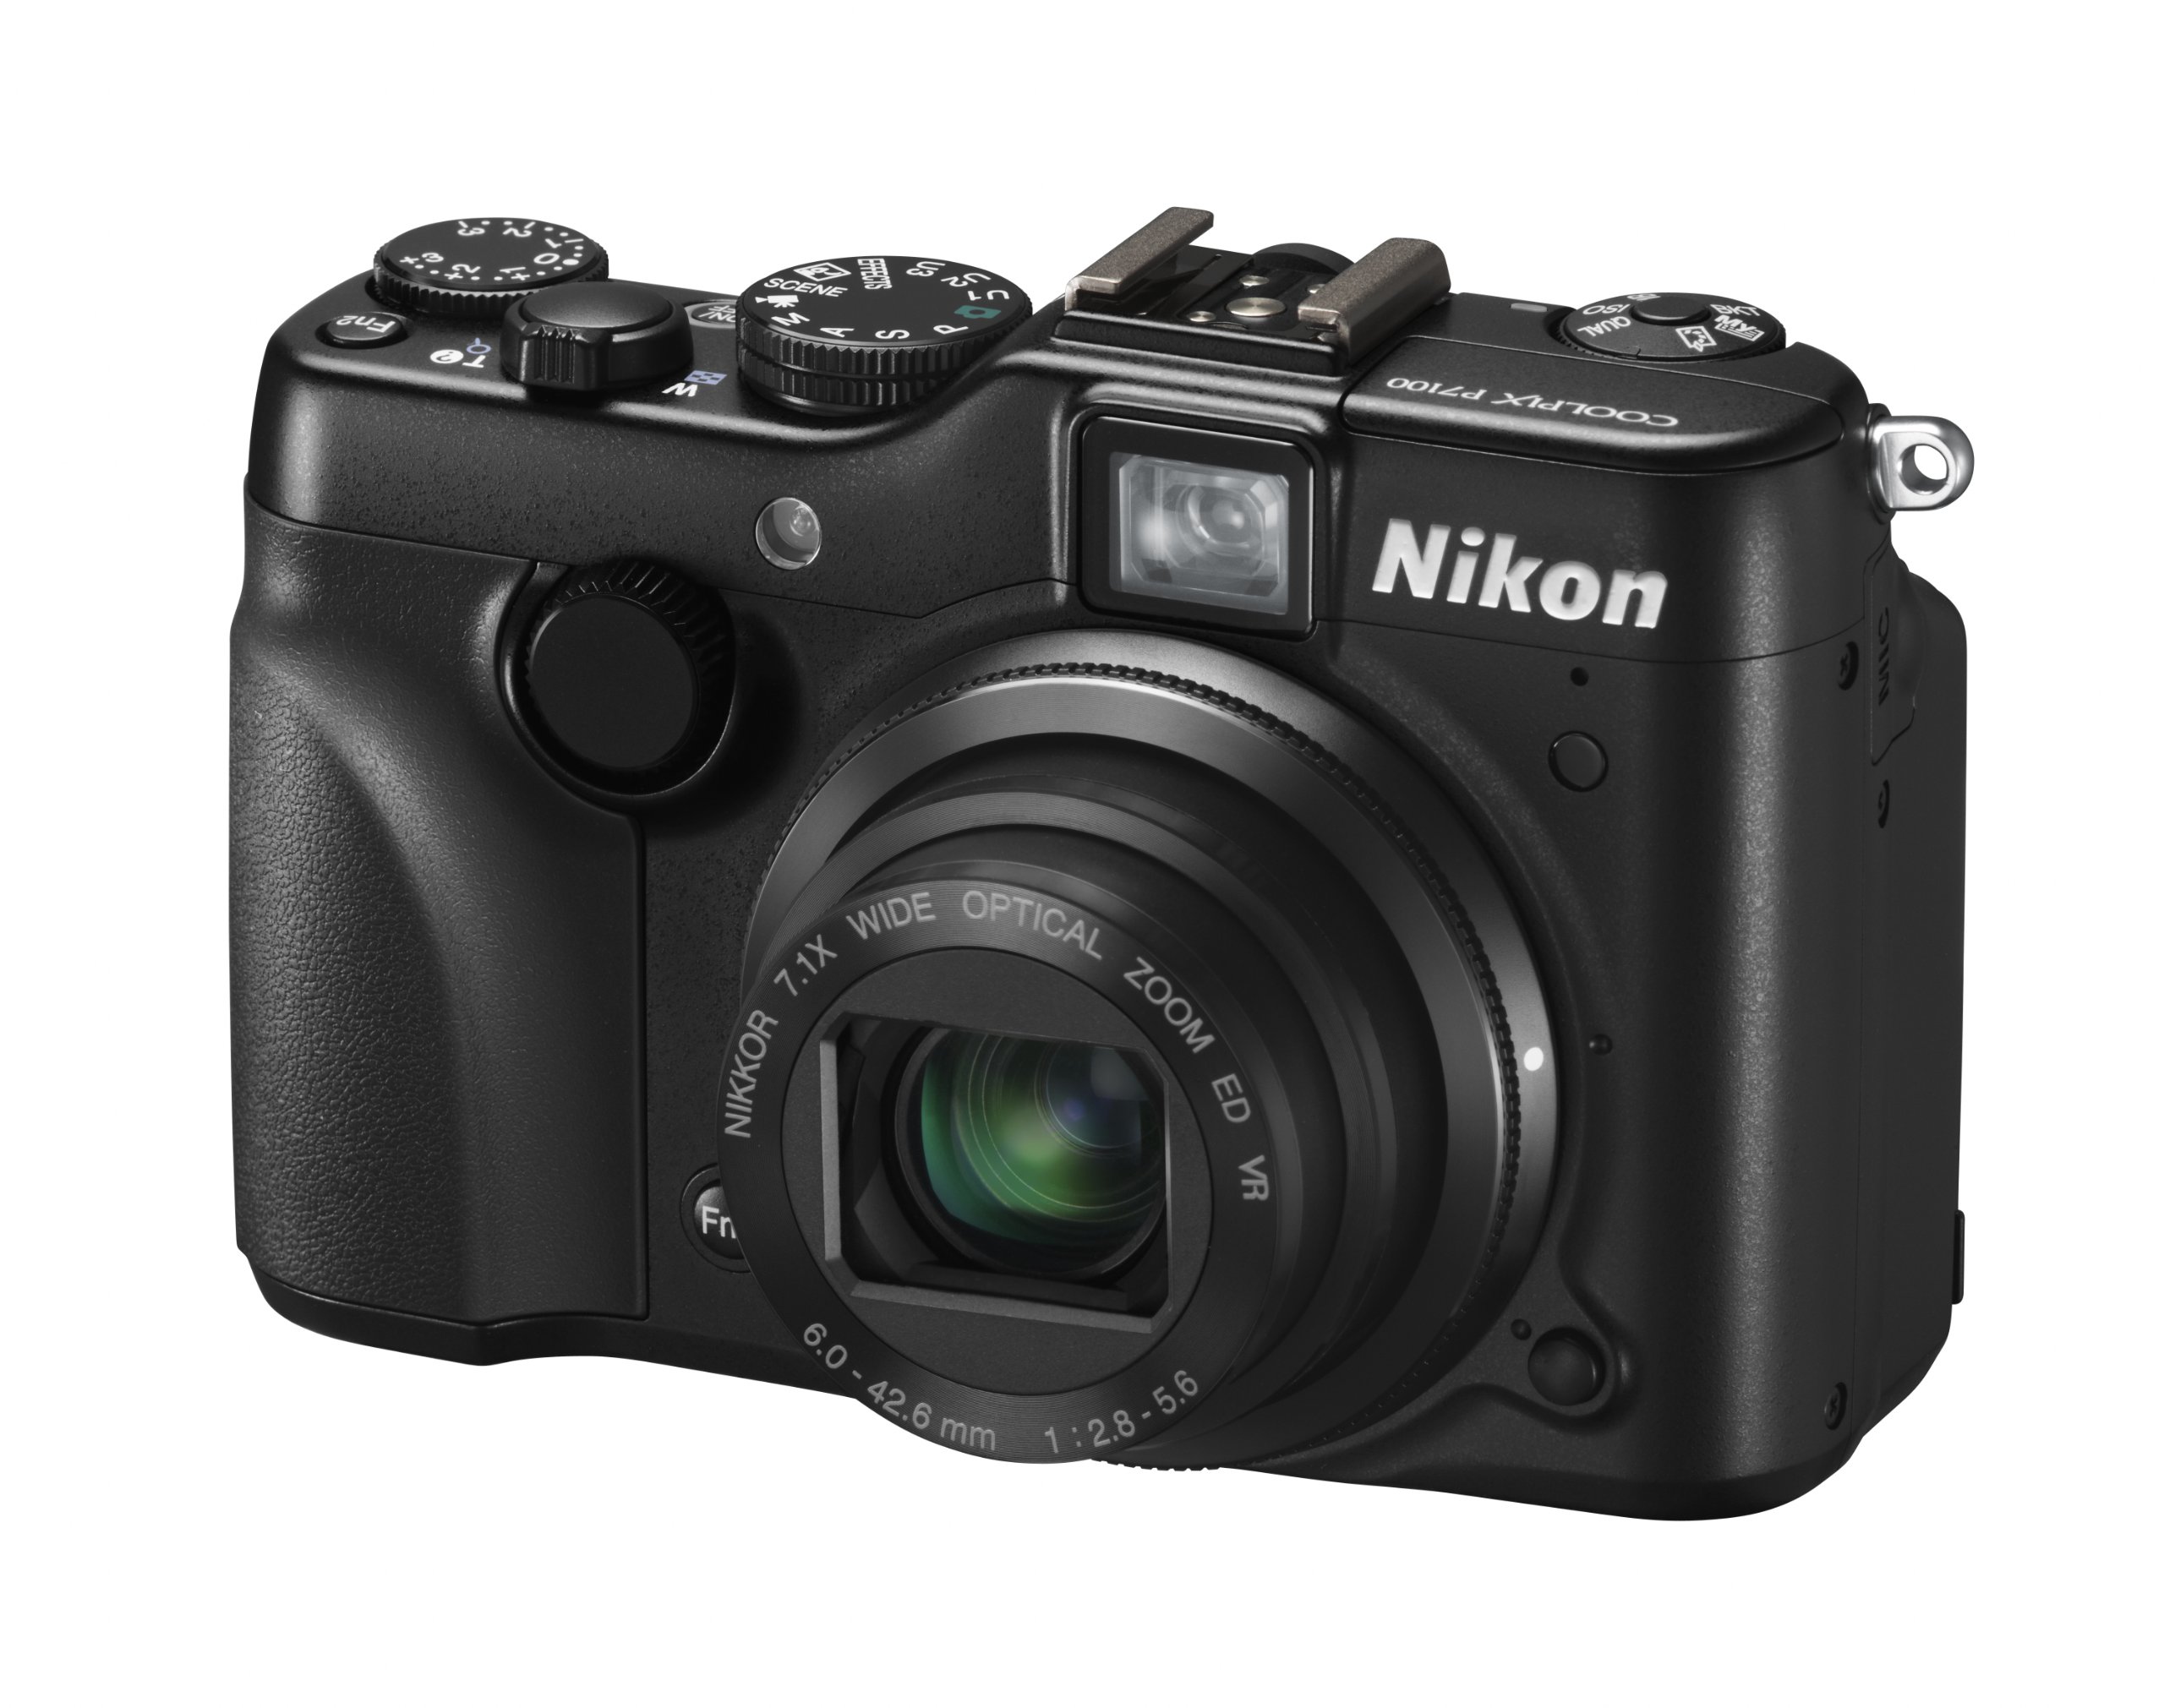 Nikon COOLPIX P7100 10.1 MP Digital Camera with 7.1x Optical Zoom NIKKOR ED Glass Lens and 3-Inch Vari-Angle LCD